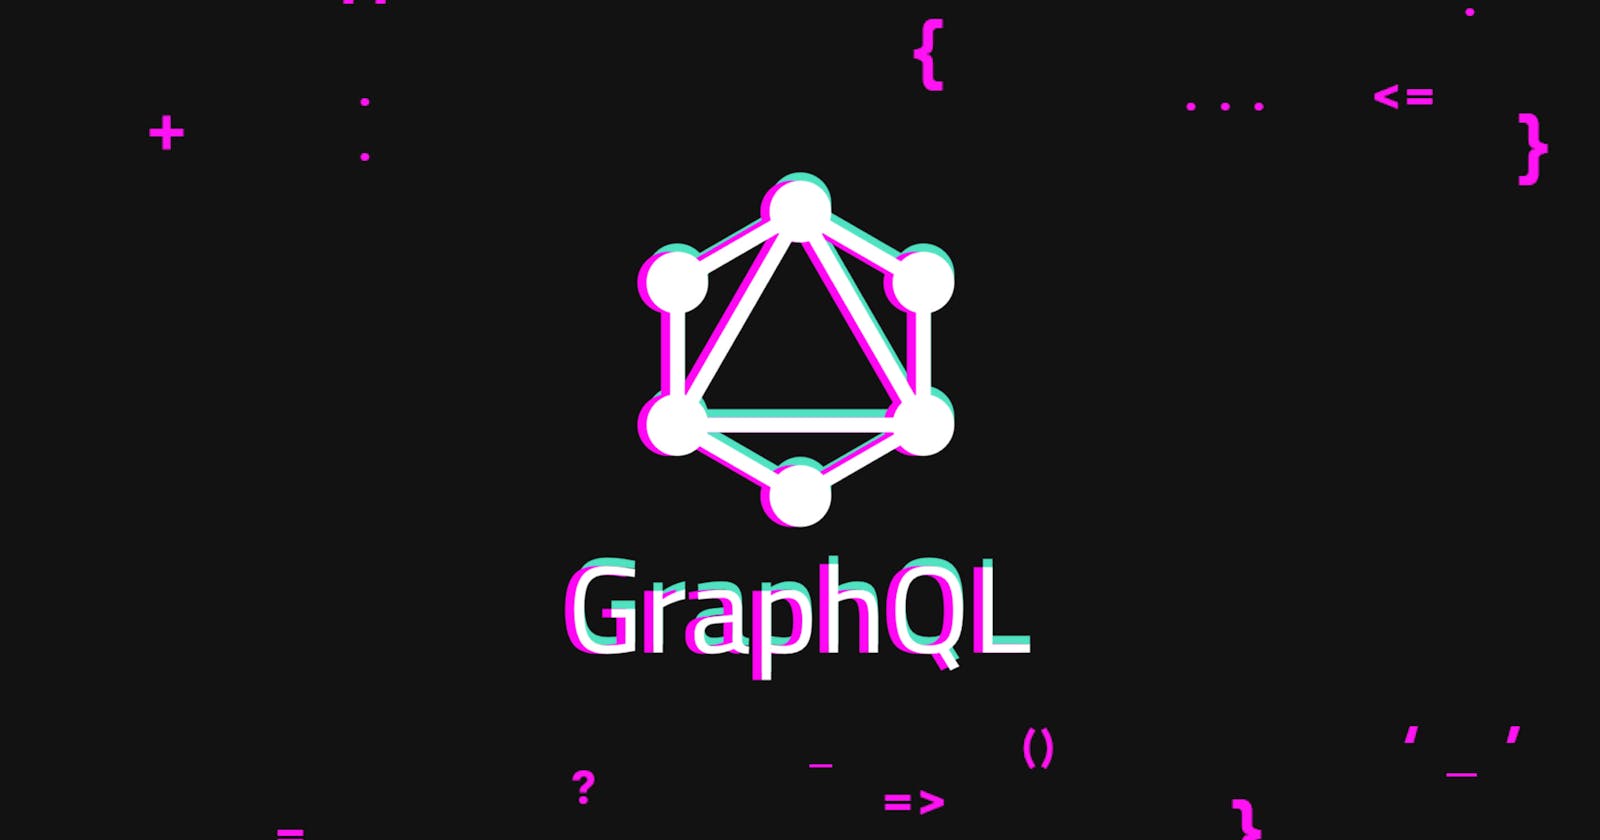 Day 3 : GraphQL - The API child of Facebook